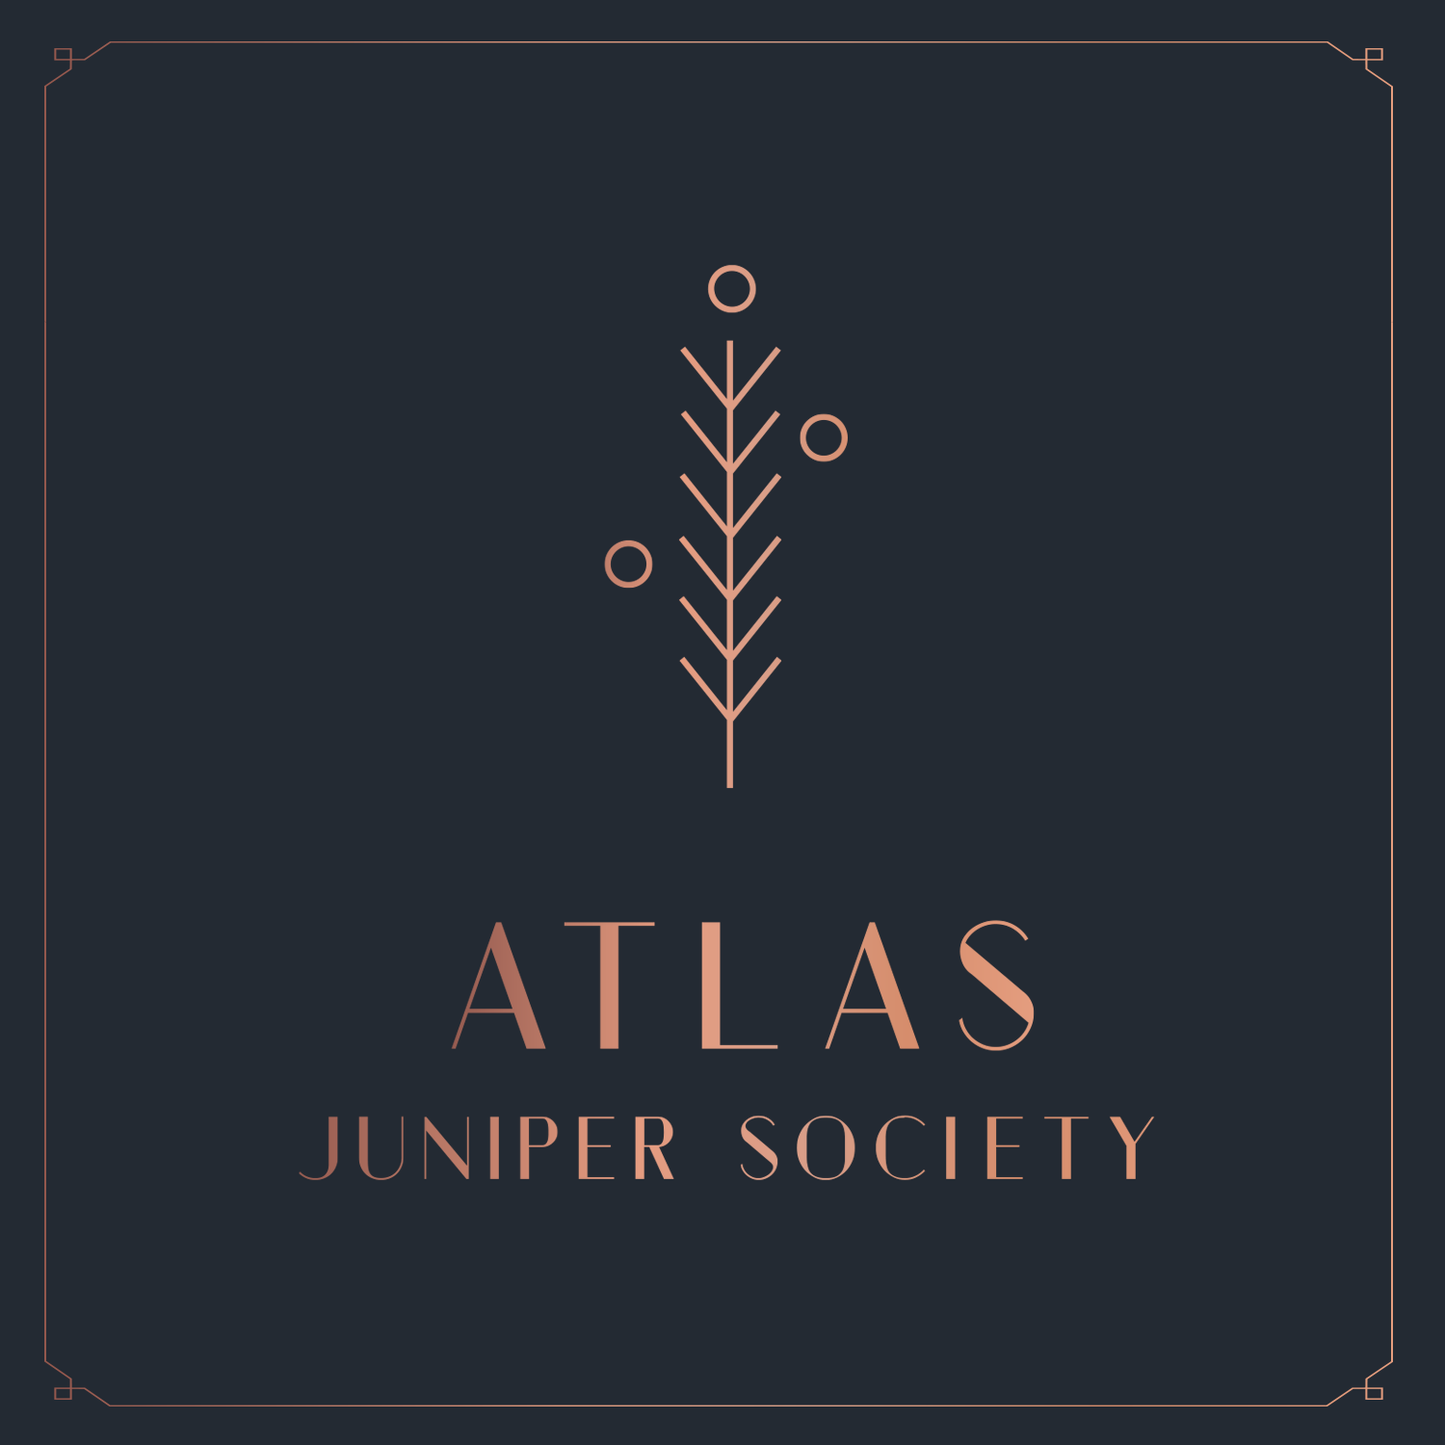 Renewal of ATLAS Juniper Society Membership